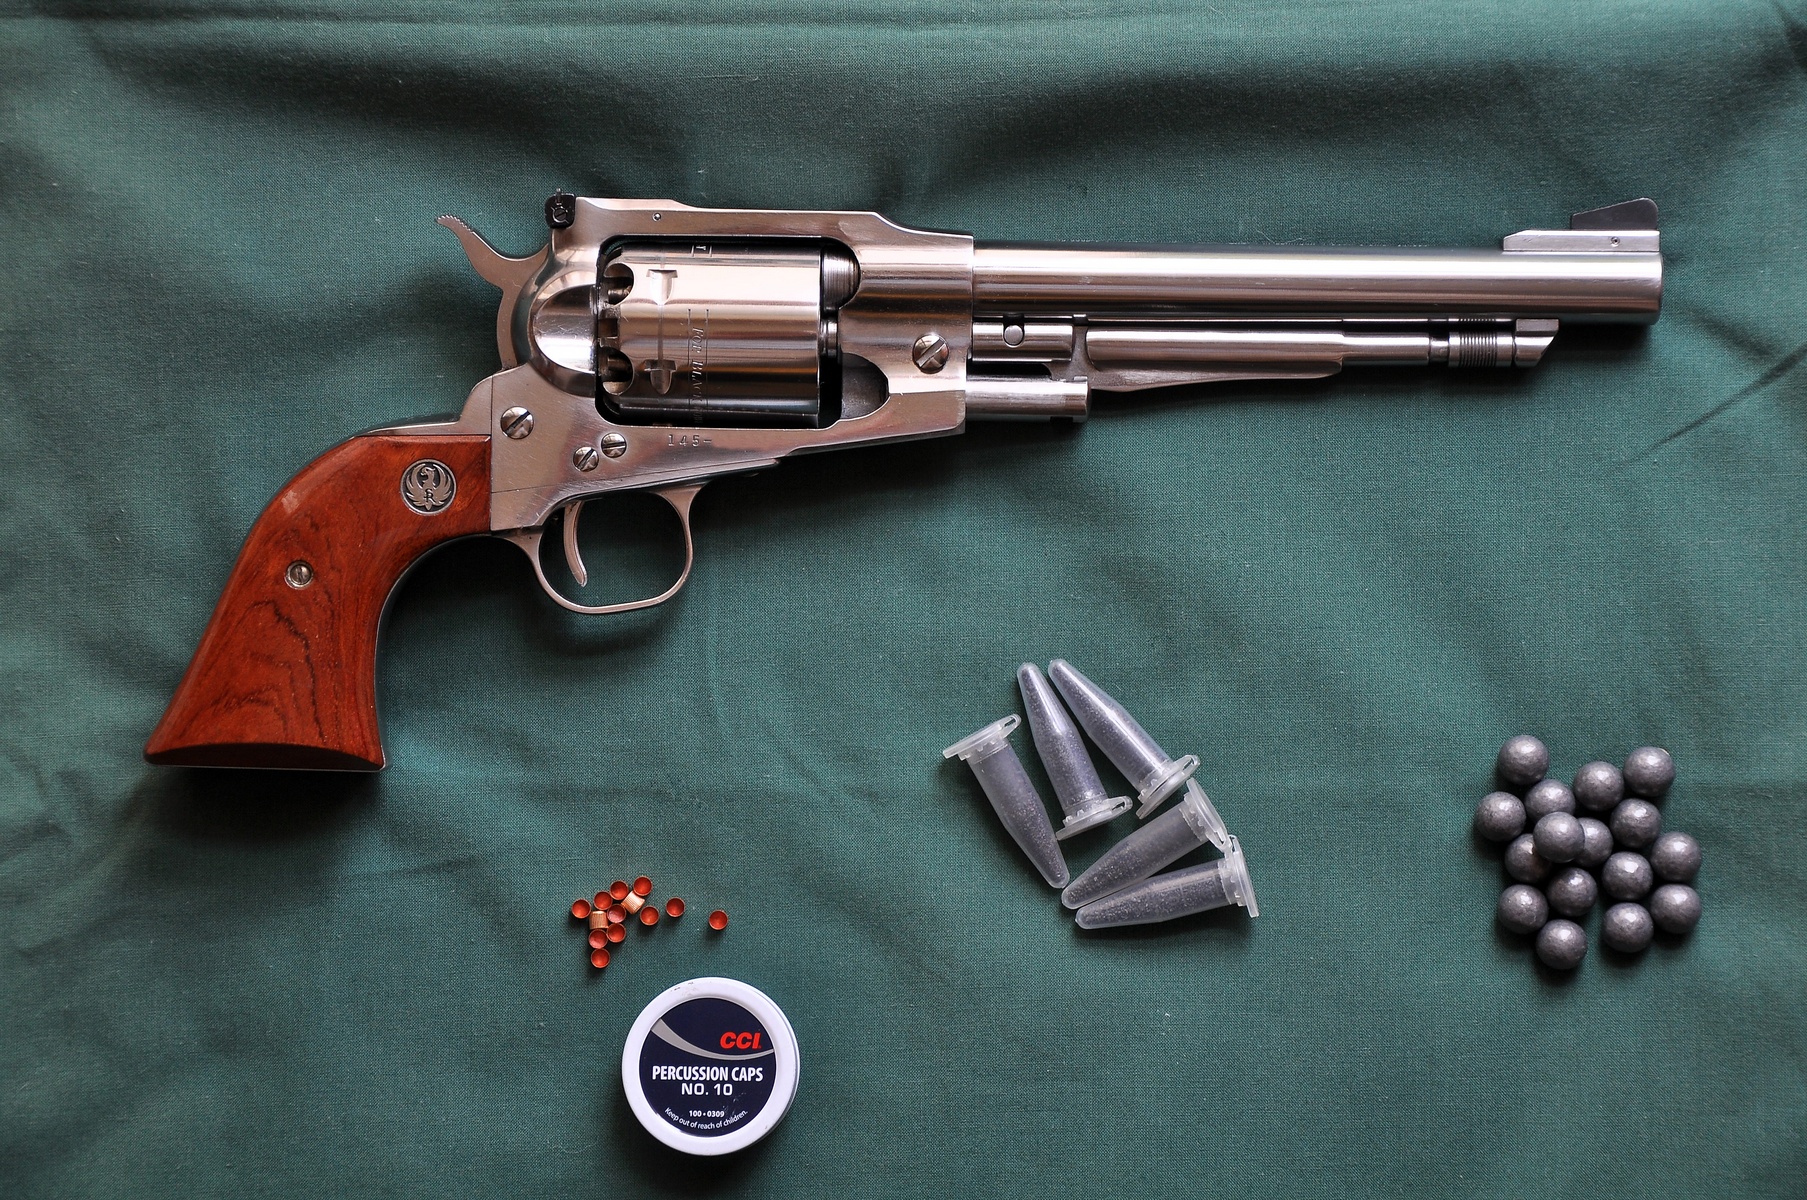 Powder Pistol Army Ruger Metre Match Pistols Shooting Shot Muzzle Australia...